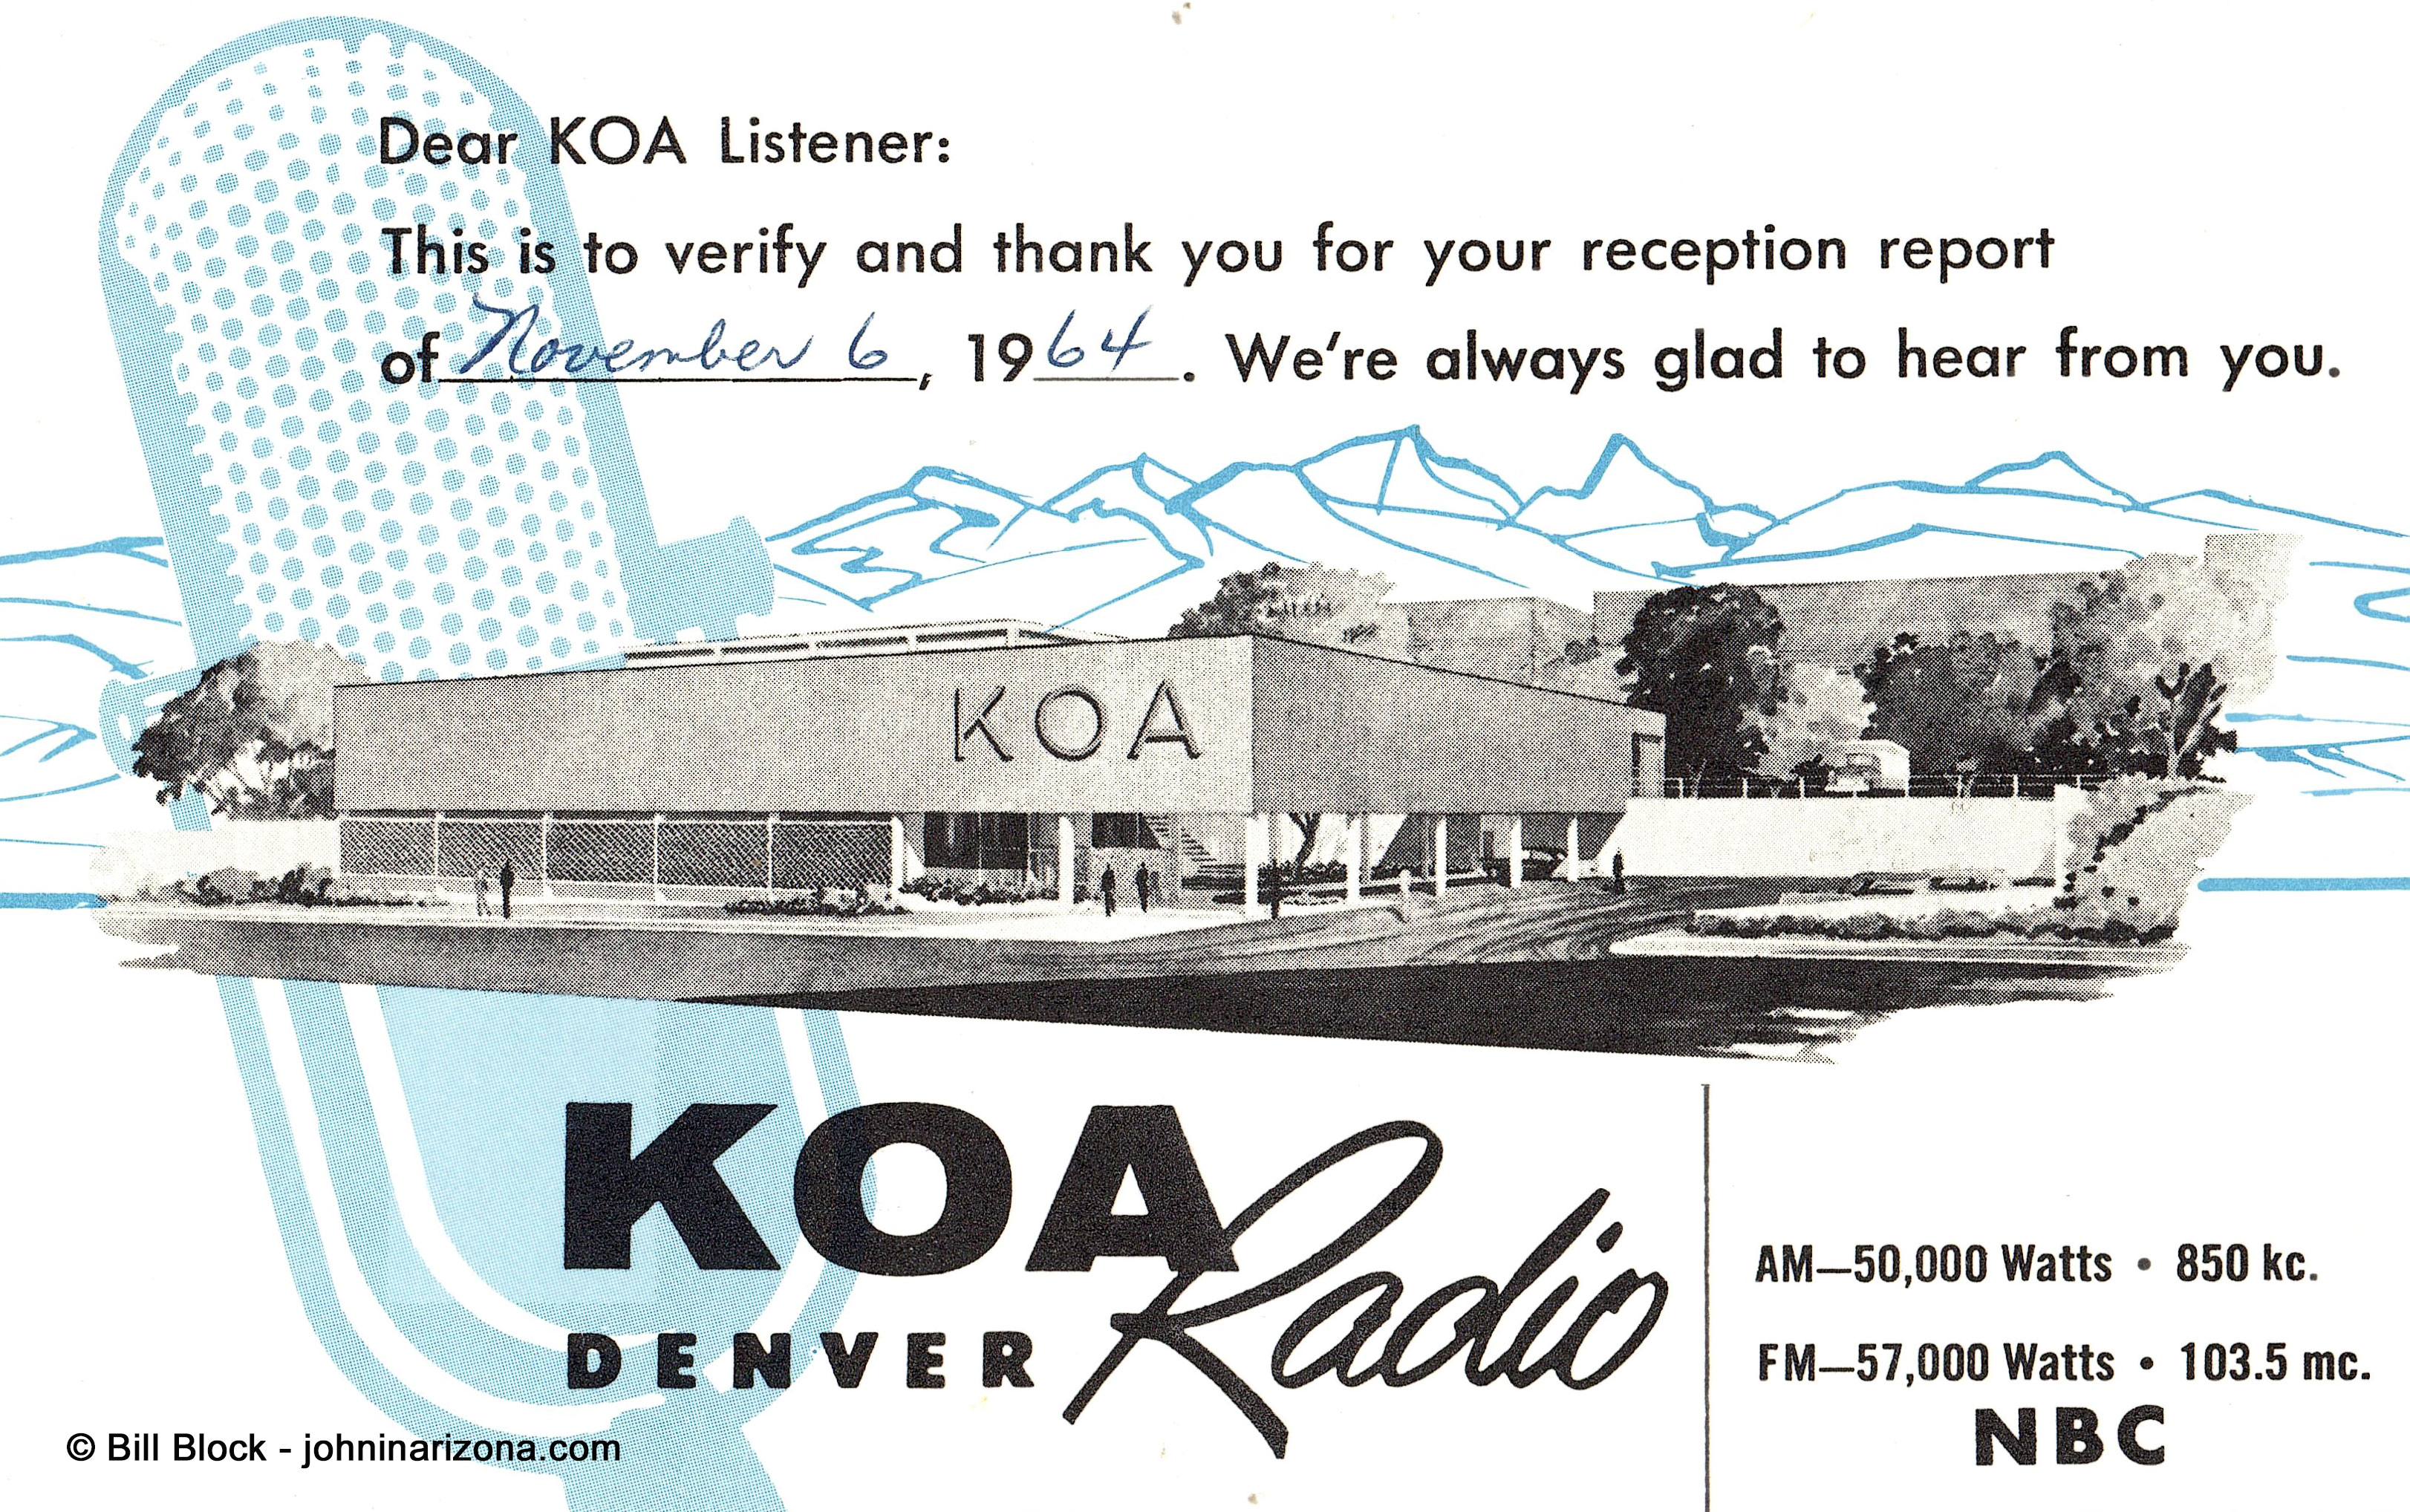 KOA Radio 850 Denver, Colorado